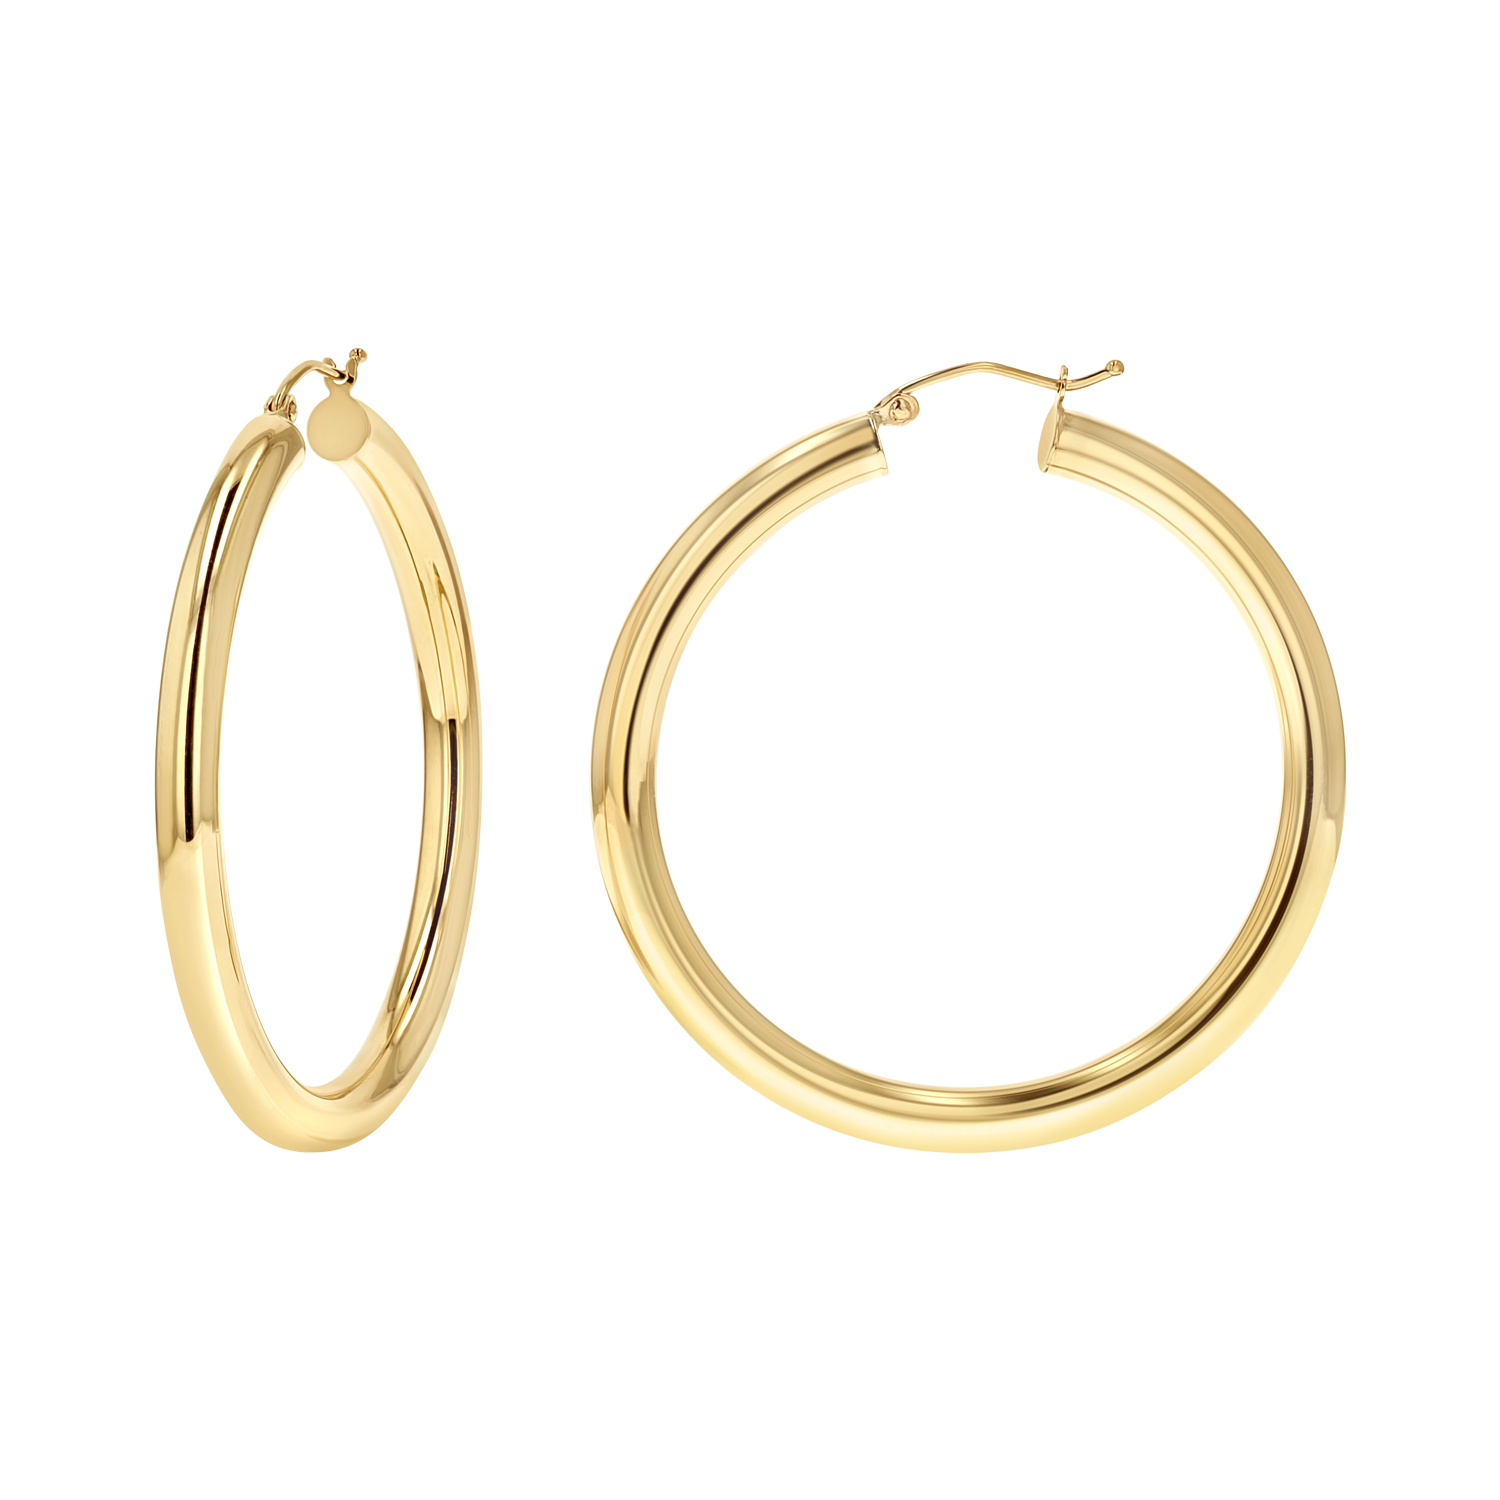 Large Hoop Earrings in 14k White Gold (2 x 50 mm)